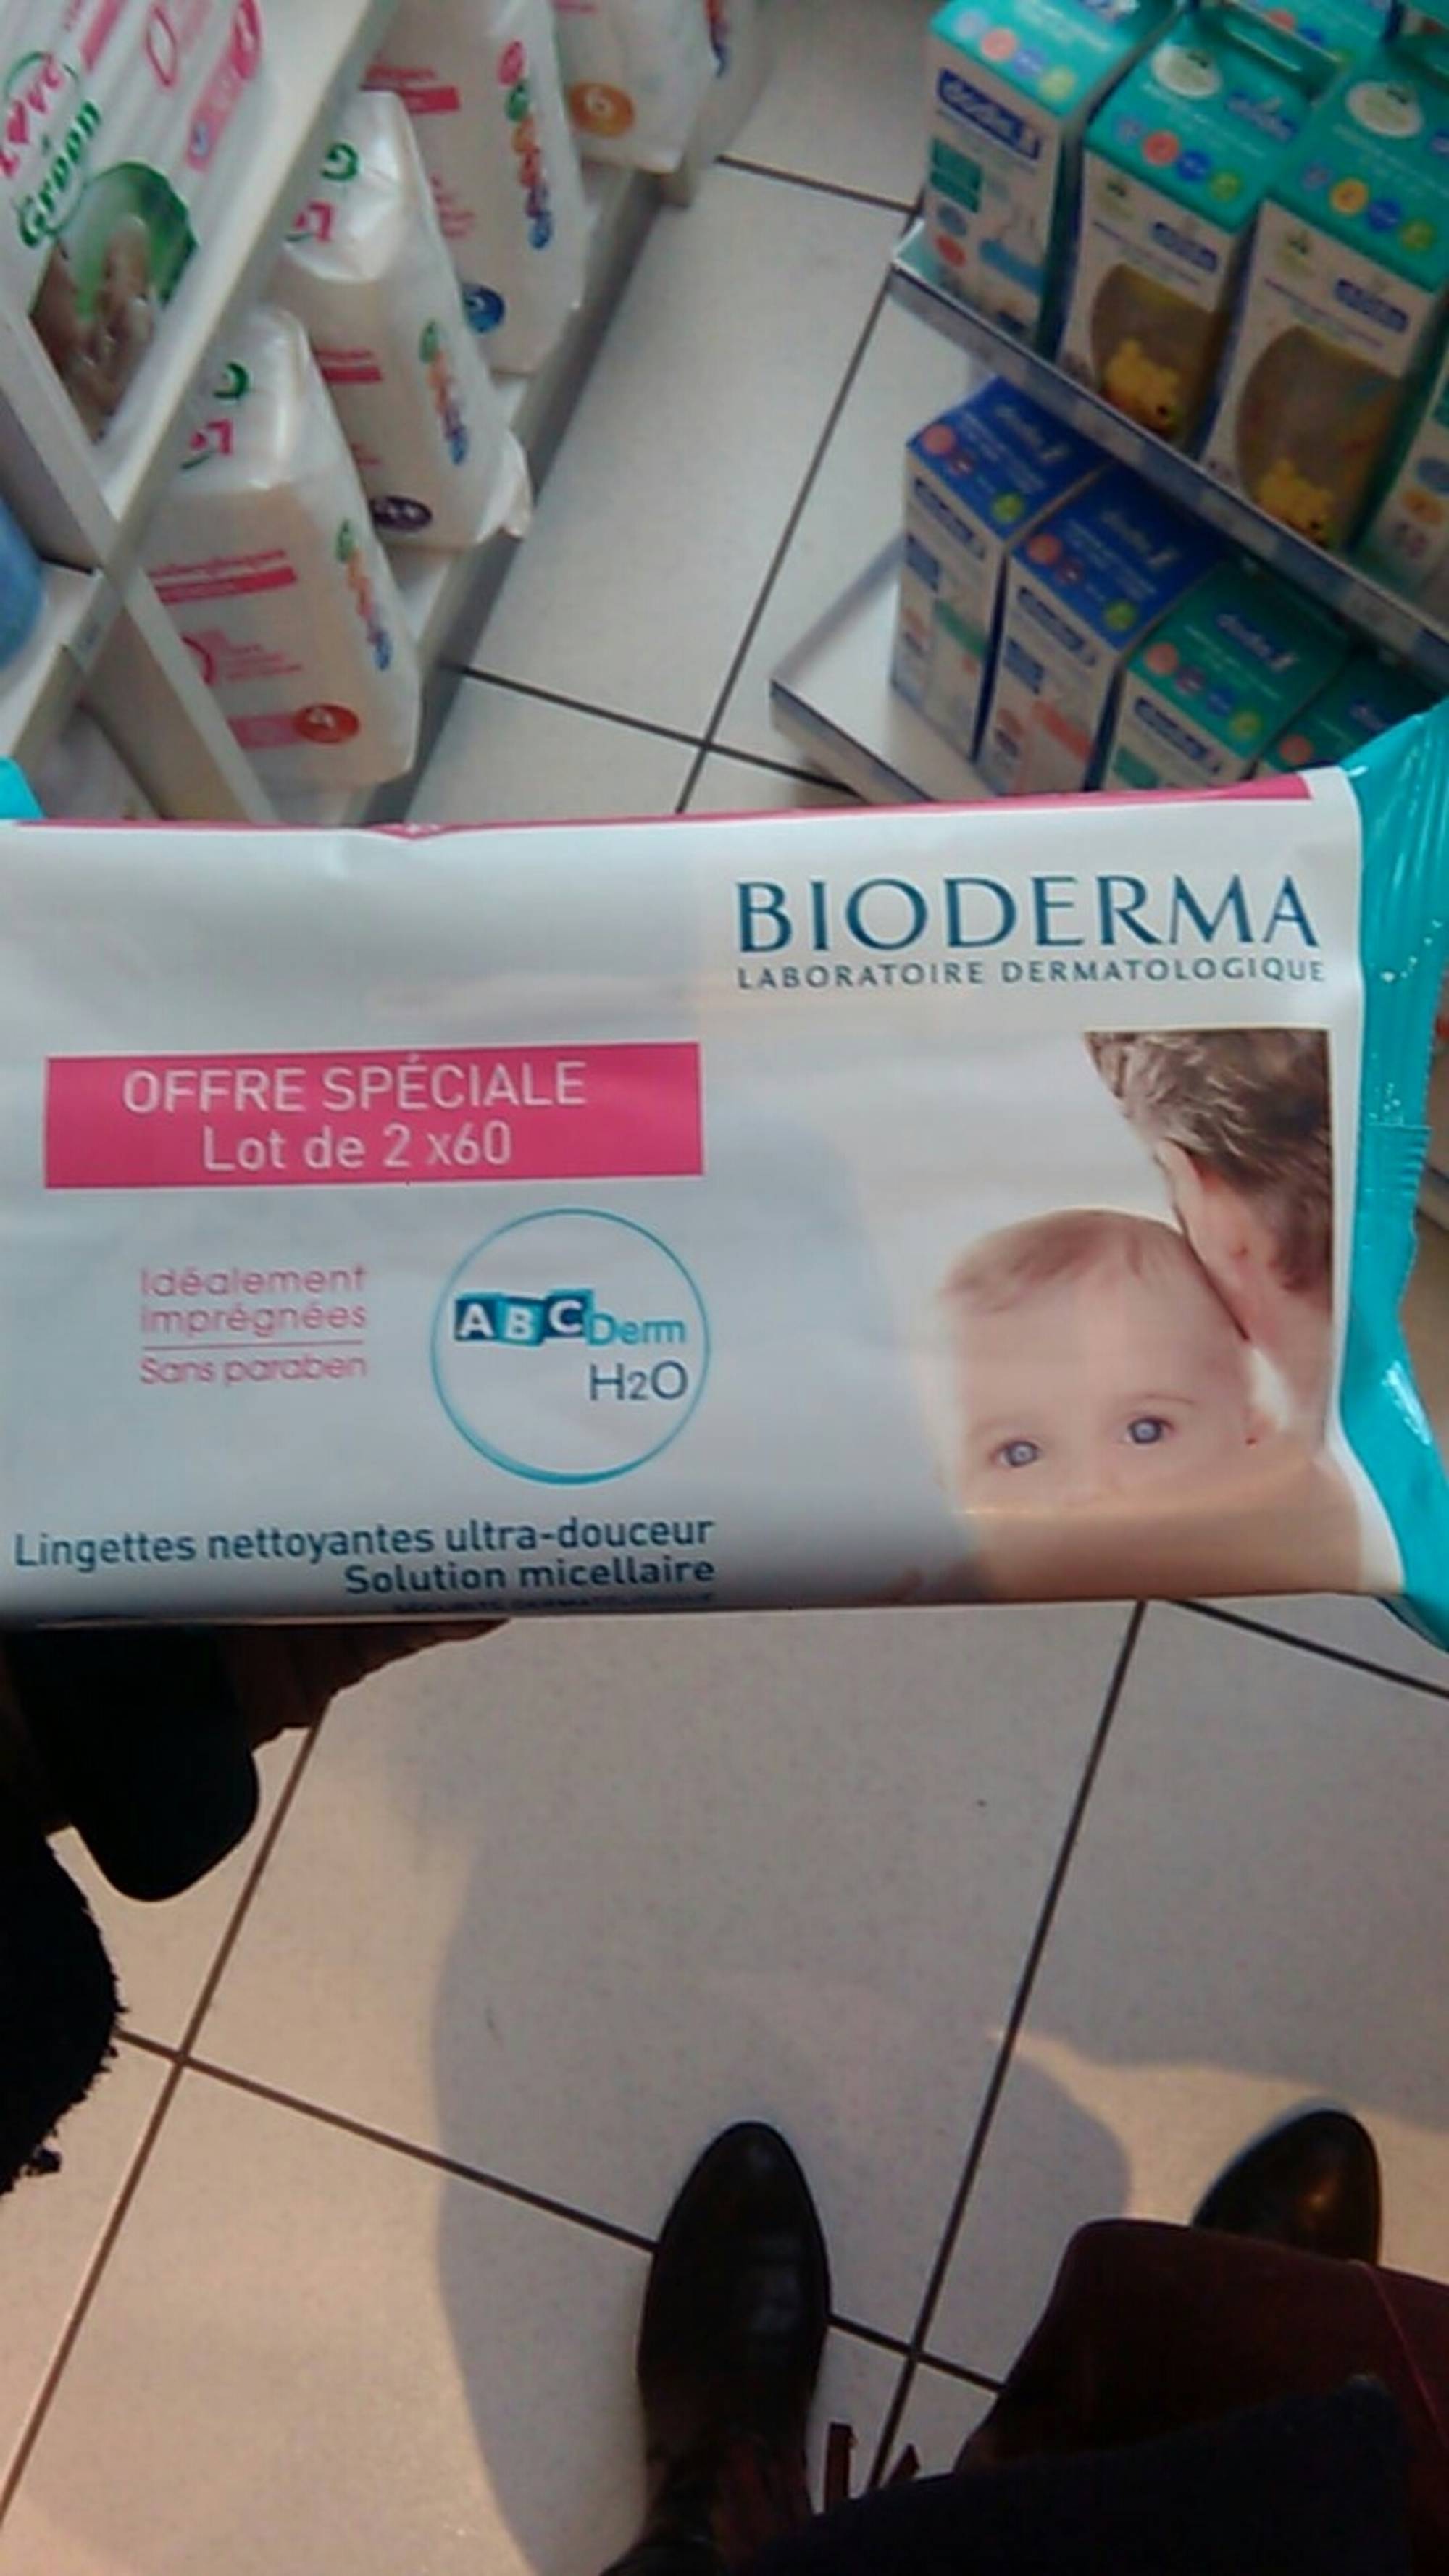 BIODERMA - ABCDerm H2O - Lingettes nettoyantes ultra-douceur